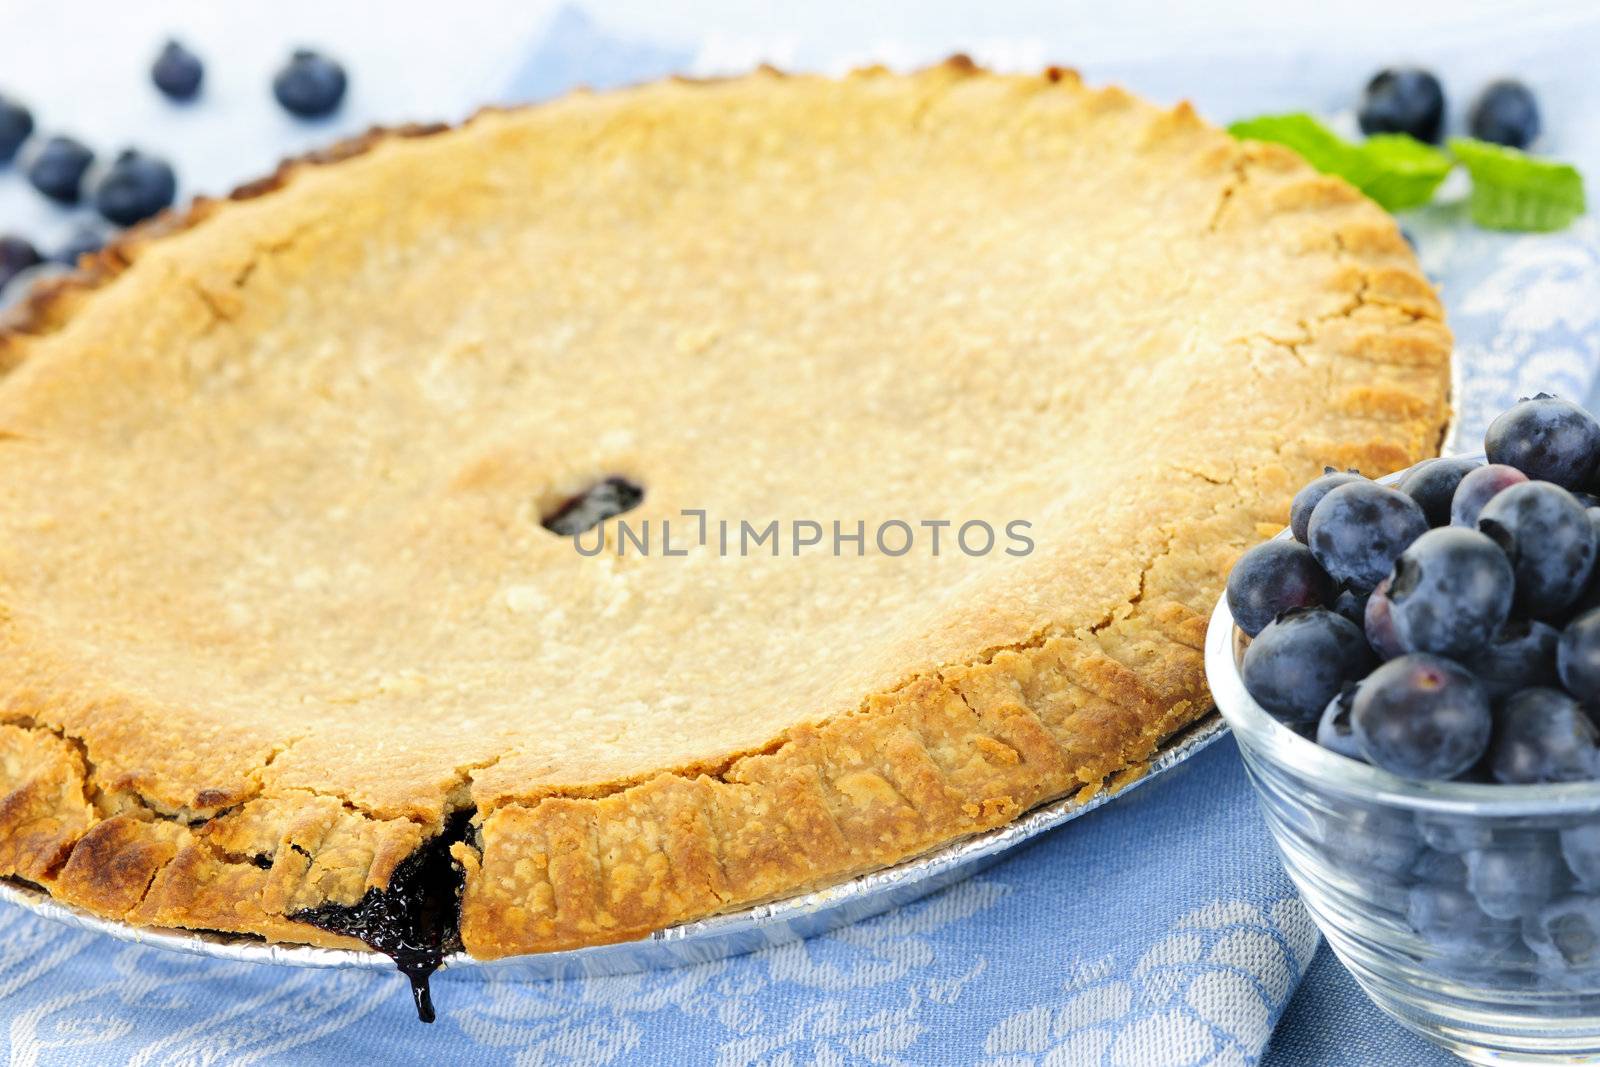 Blueberry pie by elenathewise